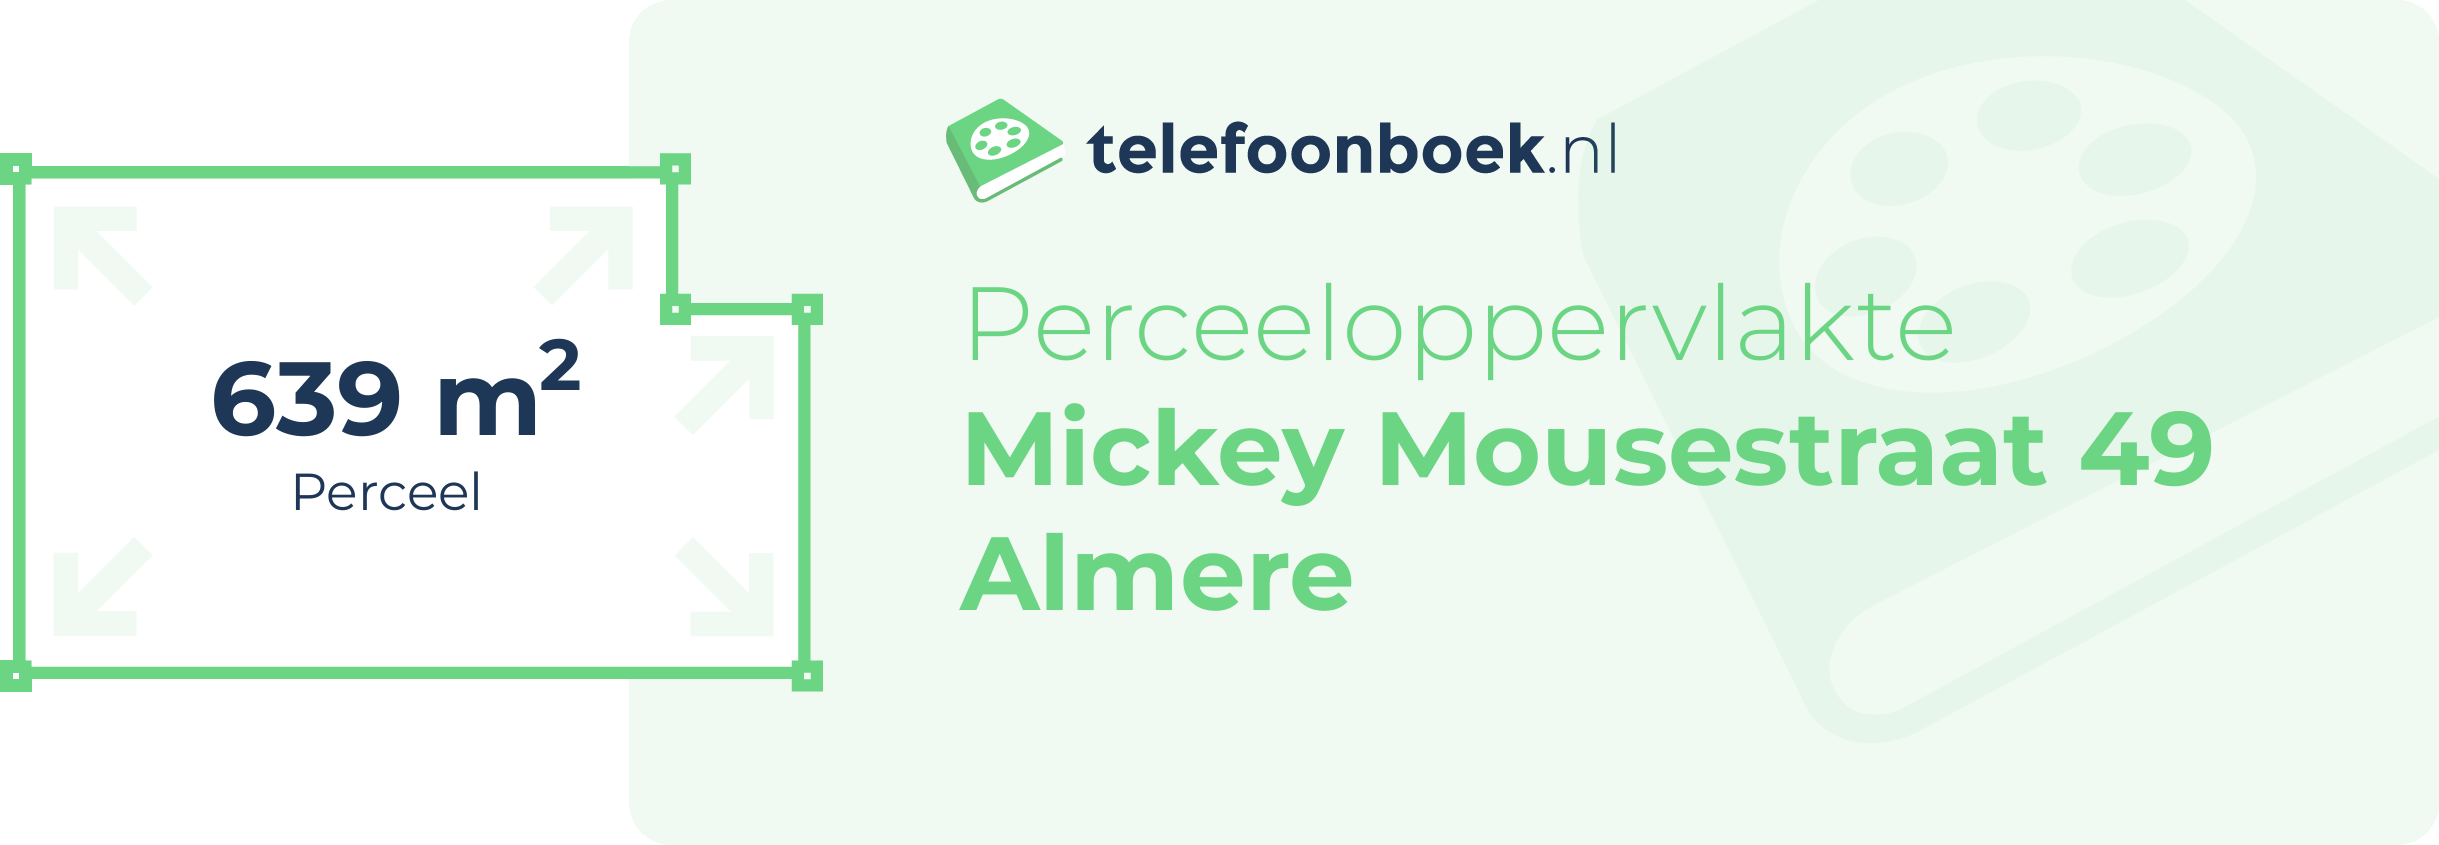 Perceeloppervlakte Mickey Mousestraat 49 Almere